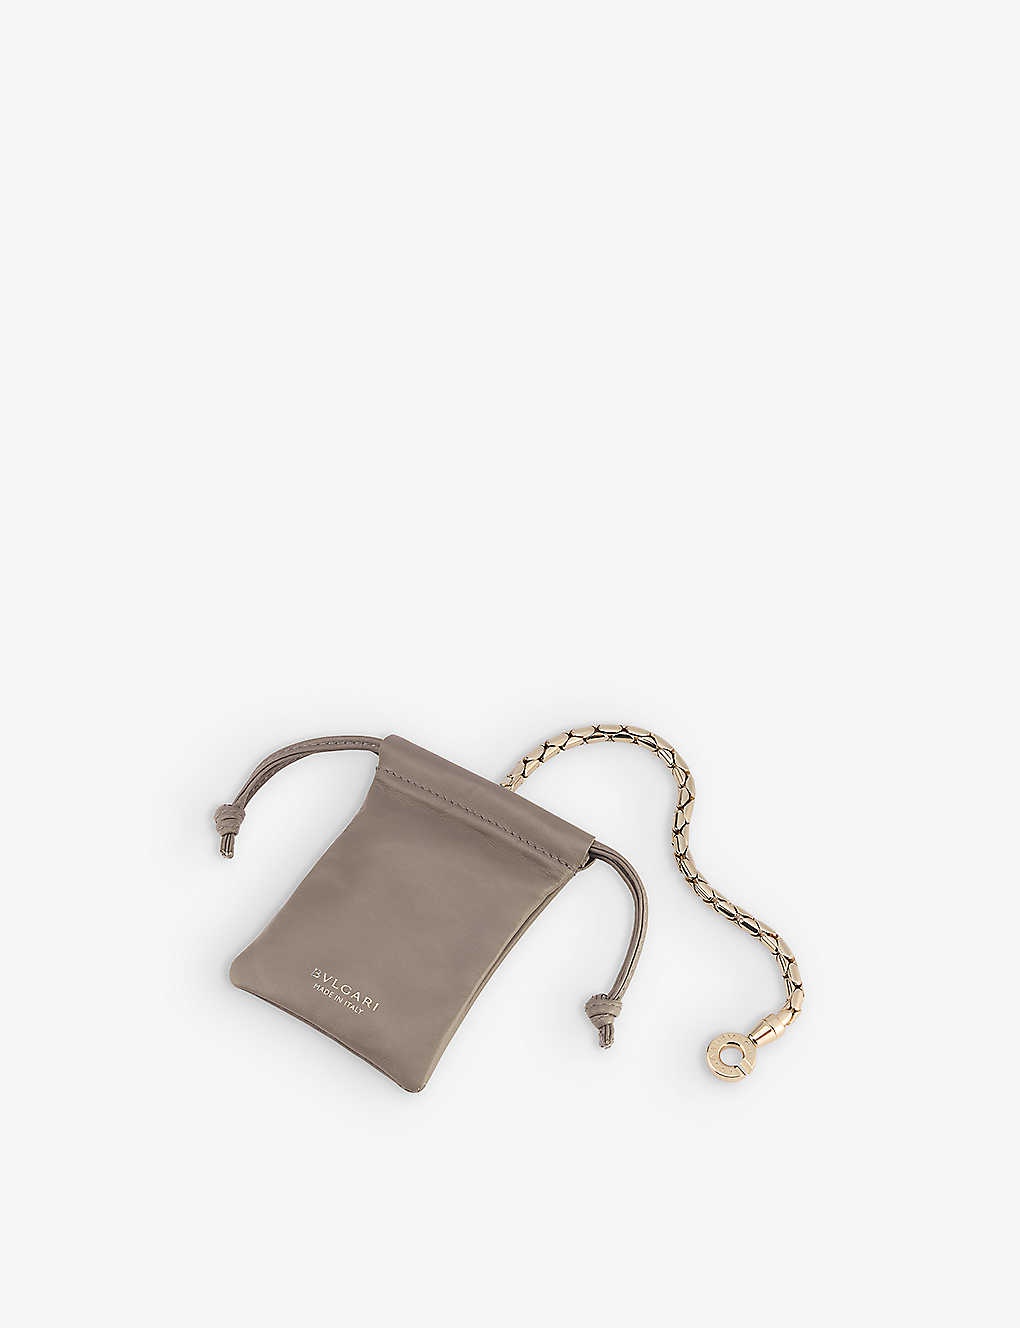 Serpenti Baia small leather shoulder bag - 6